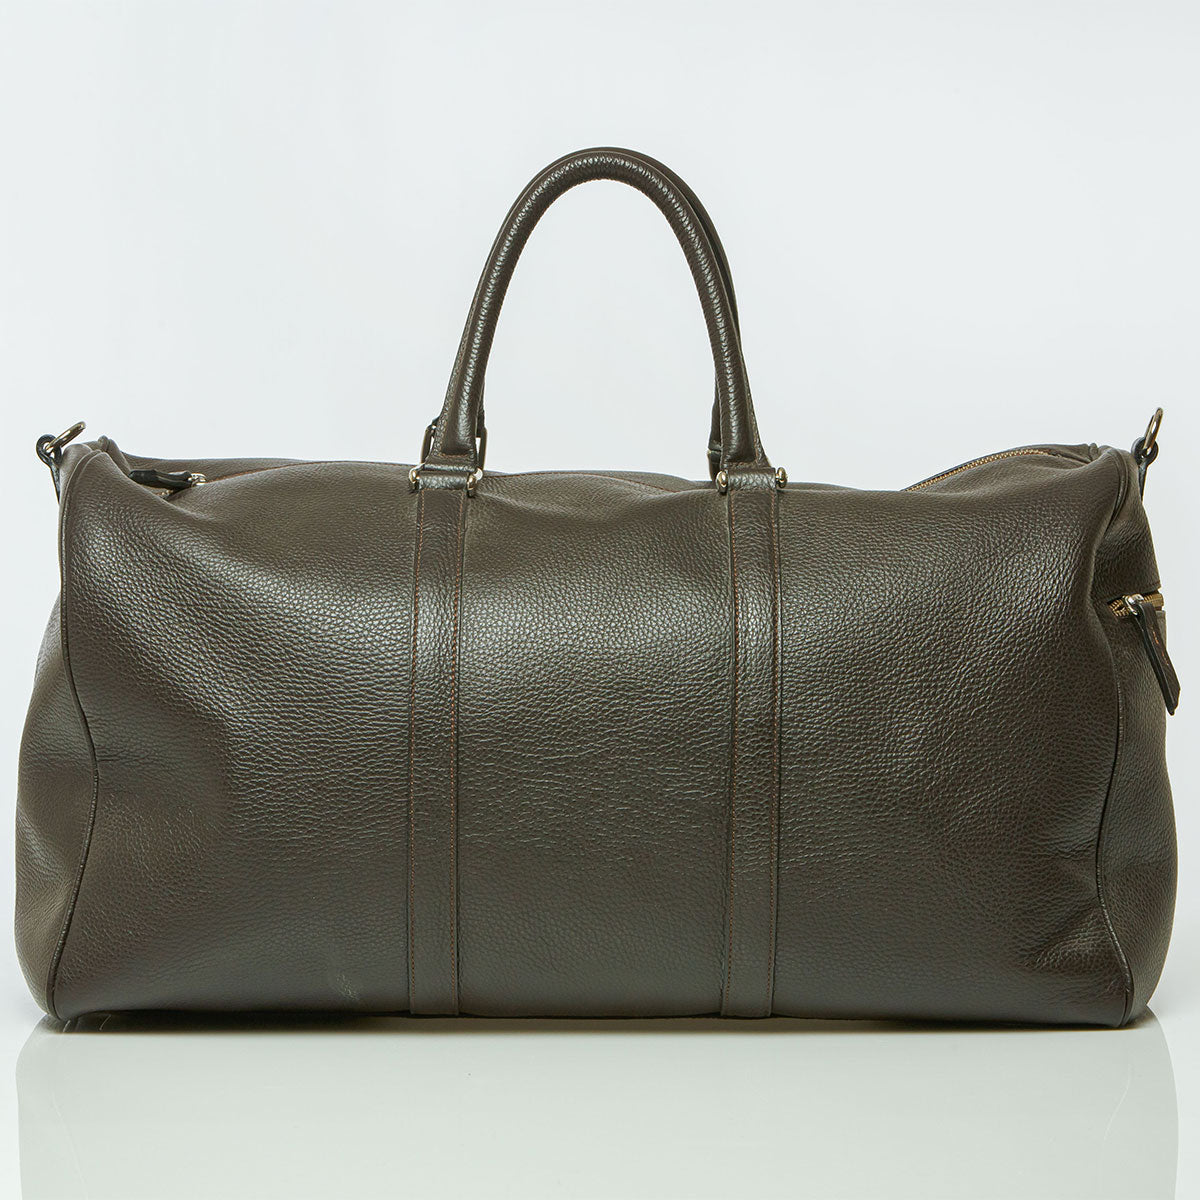 Leather Luggage Duffle Weekend Bag